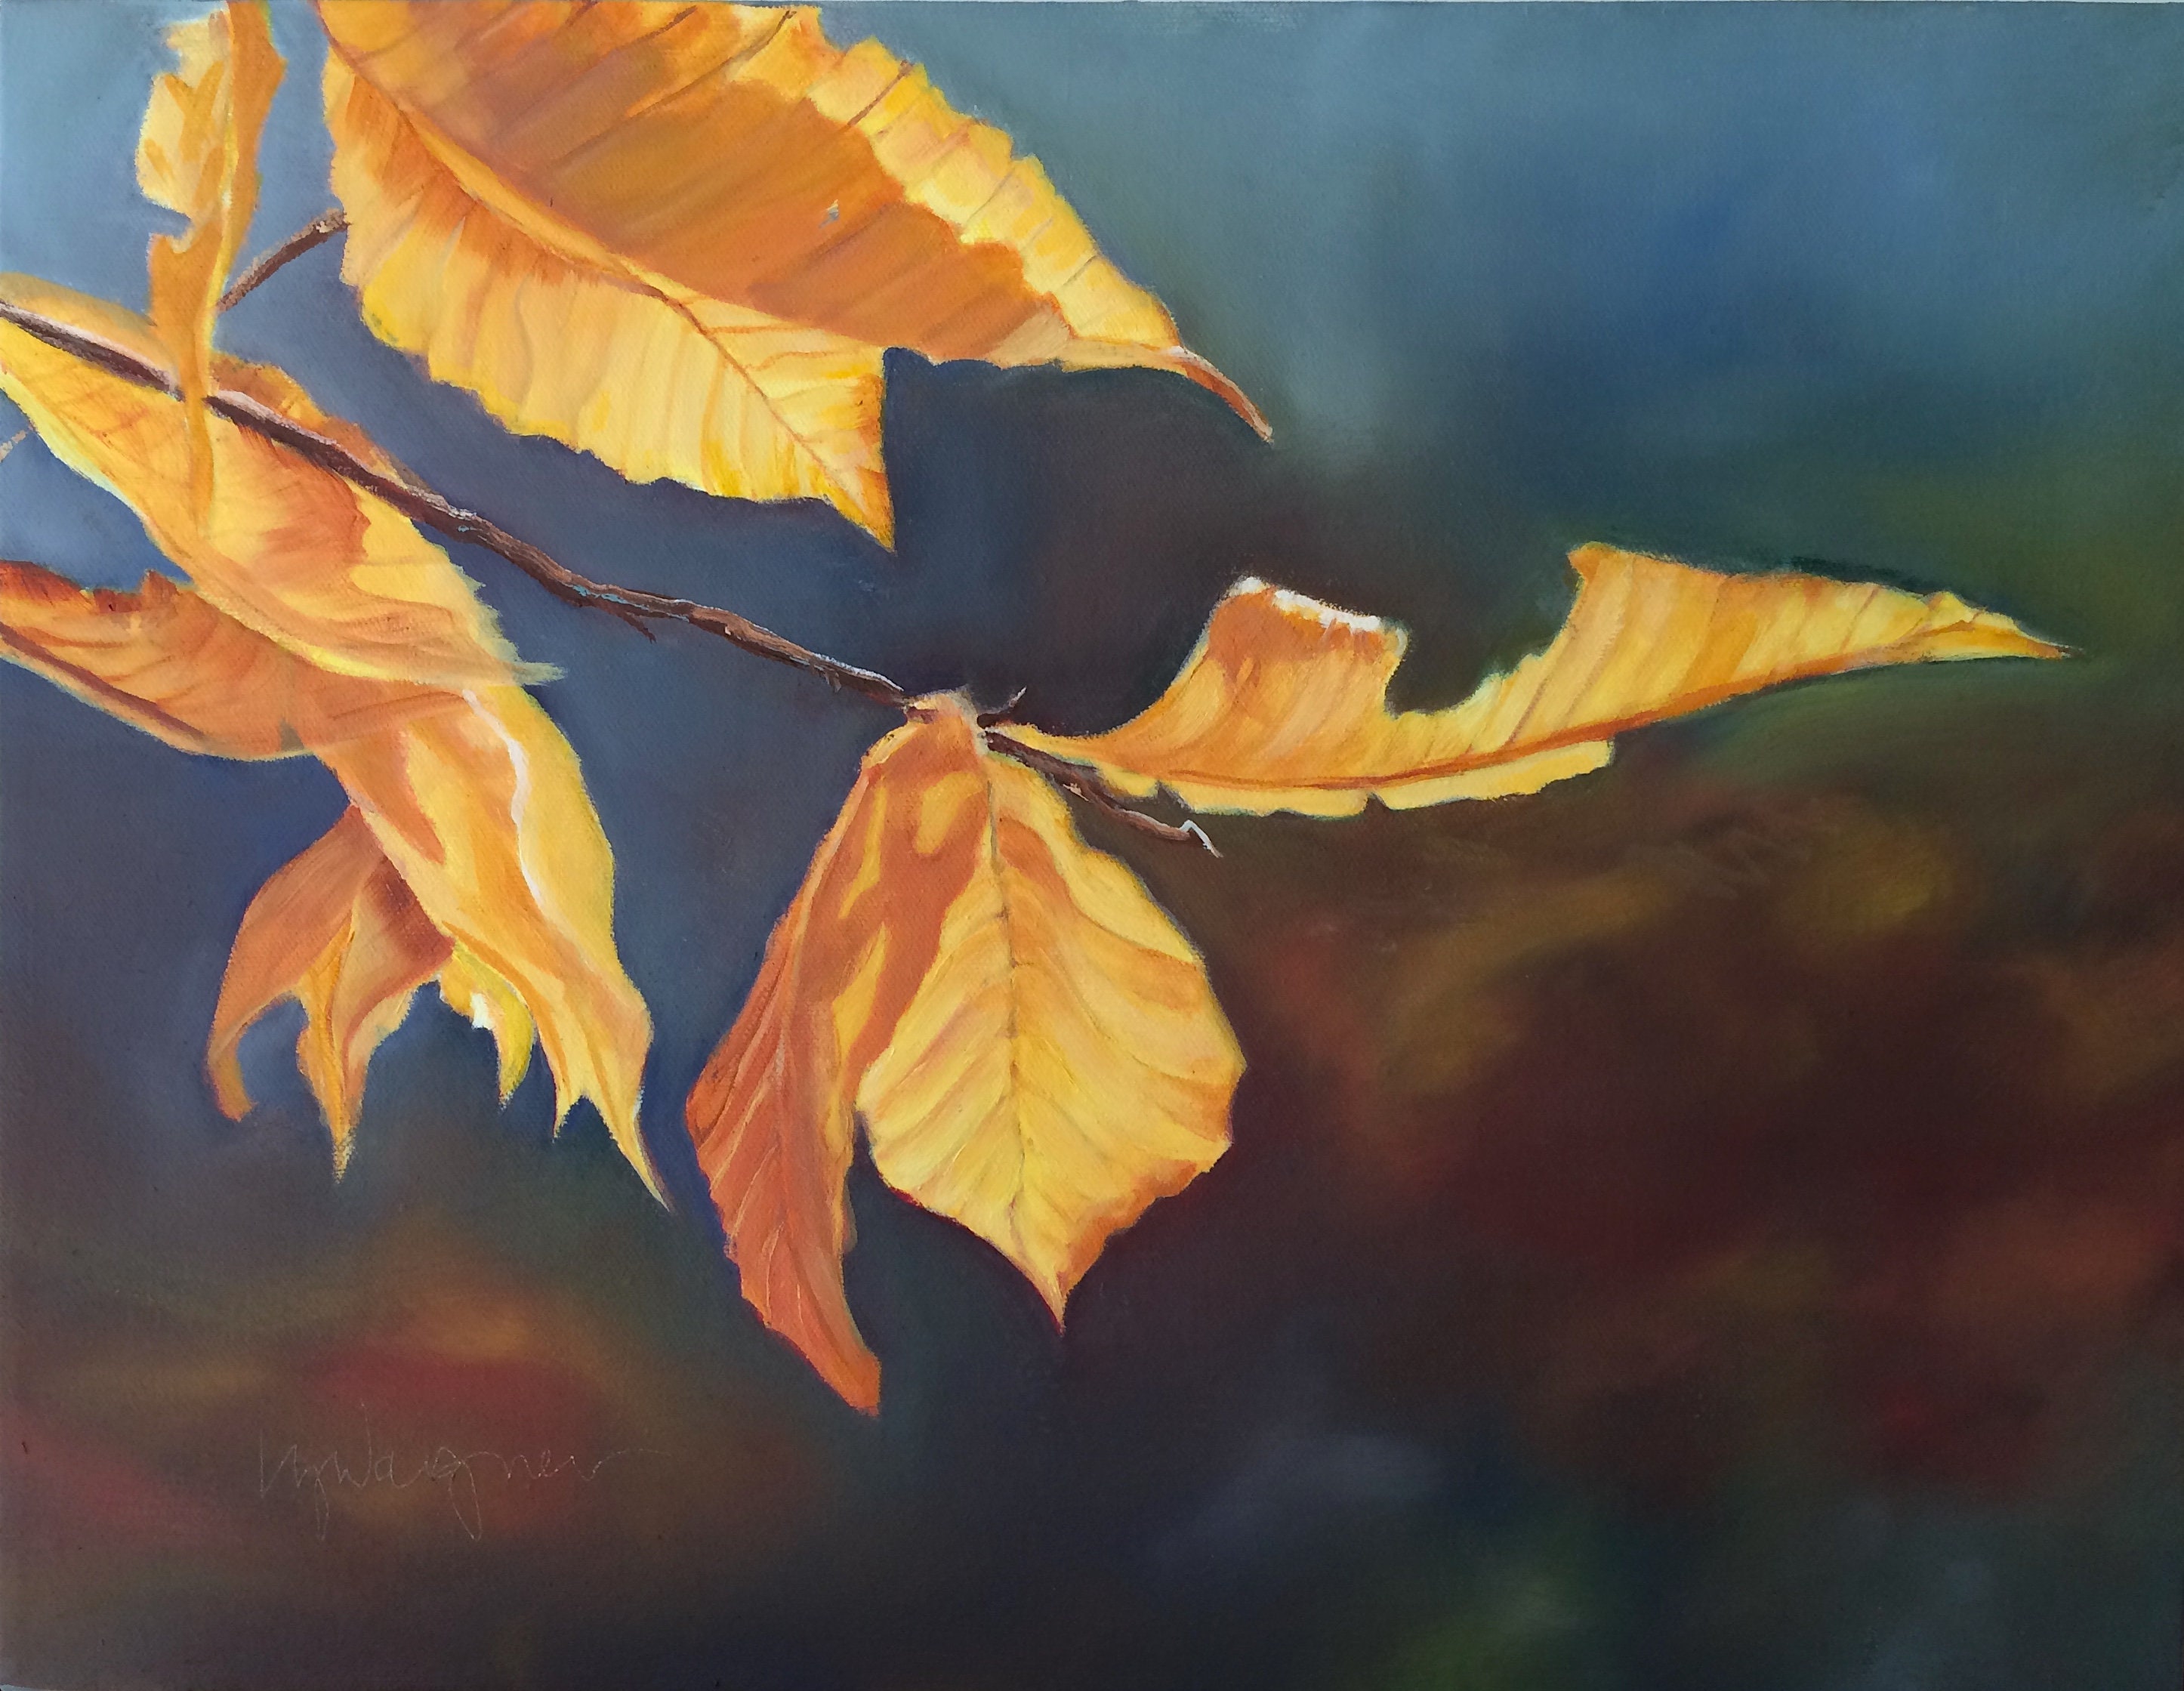 Feike Spilled Golden Paint on Canvas Print Ivy Bronx Size: 45 H x 30 W x 1.5 D